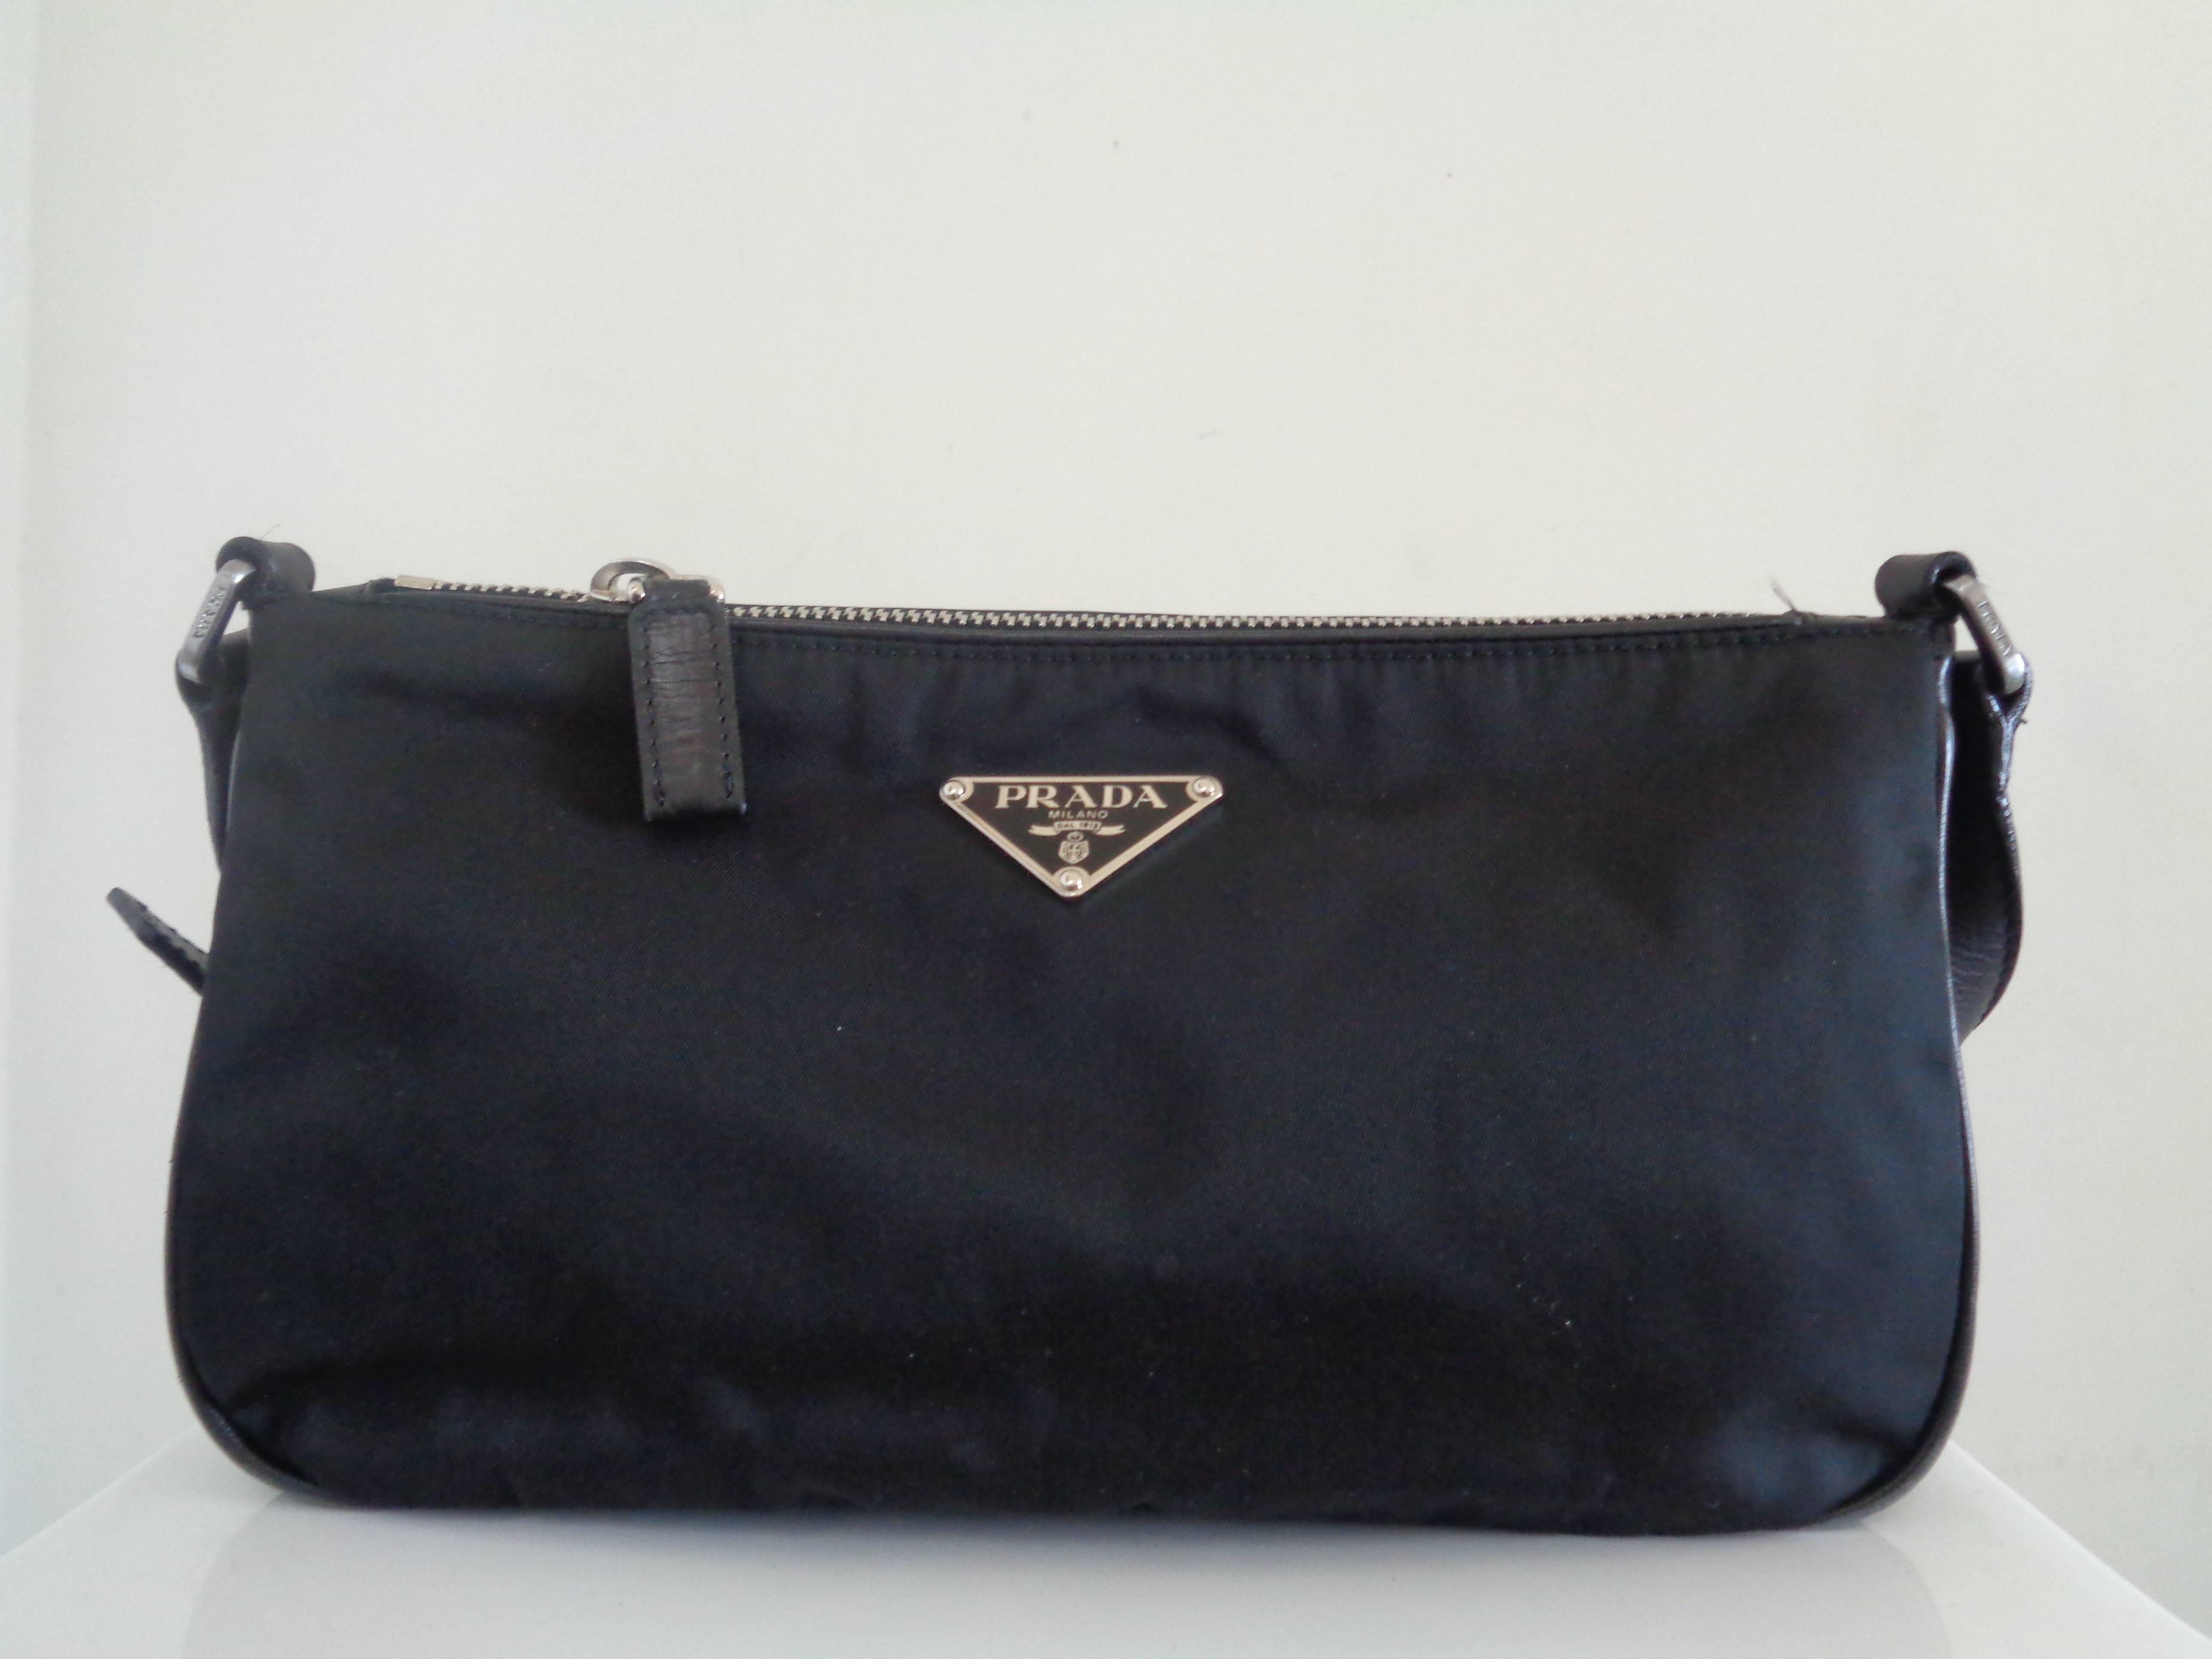 Prada Black Canvas Shoulder Bag

Totally made in italy